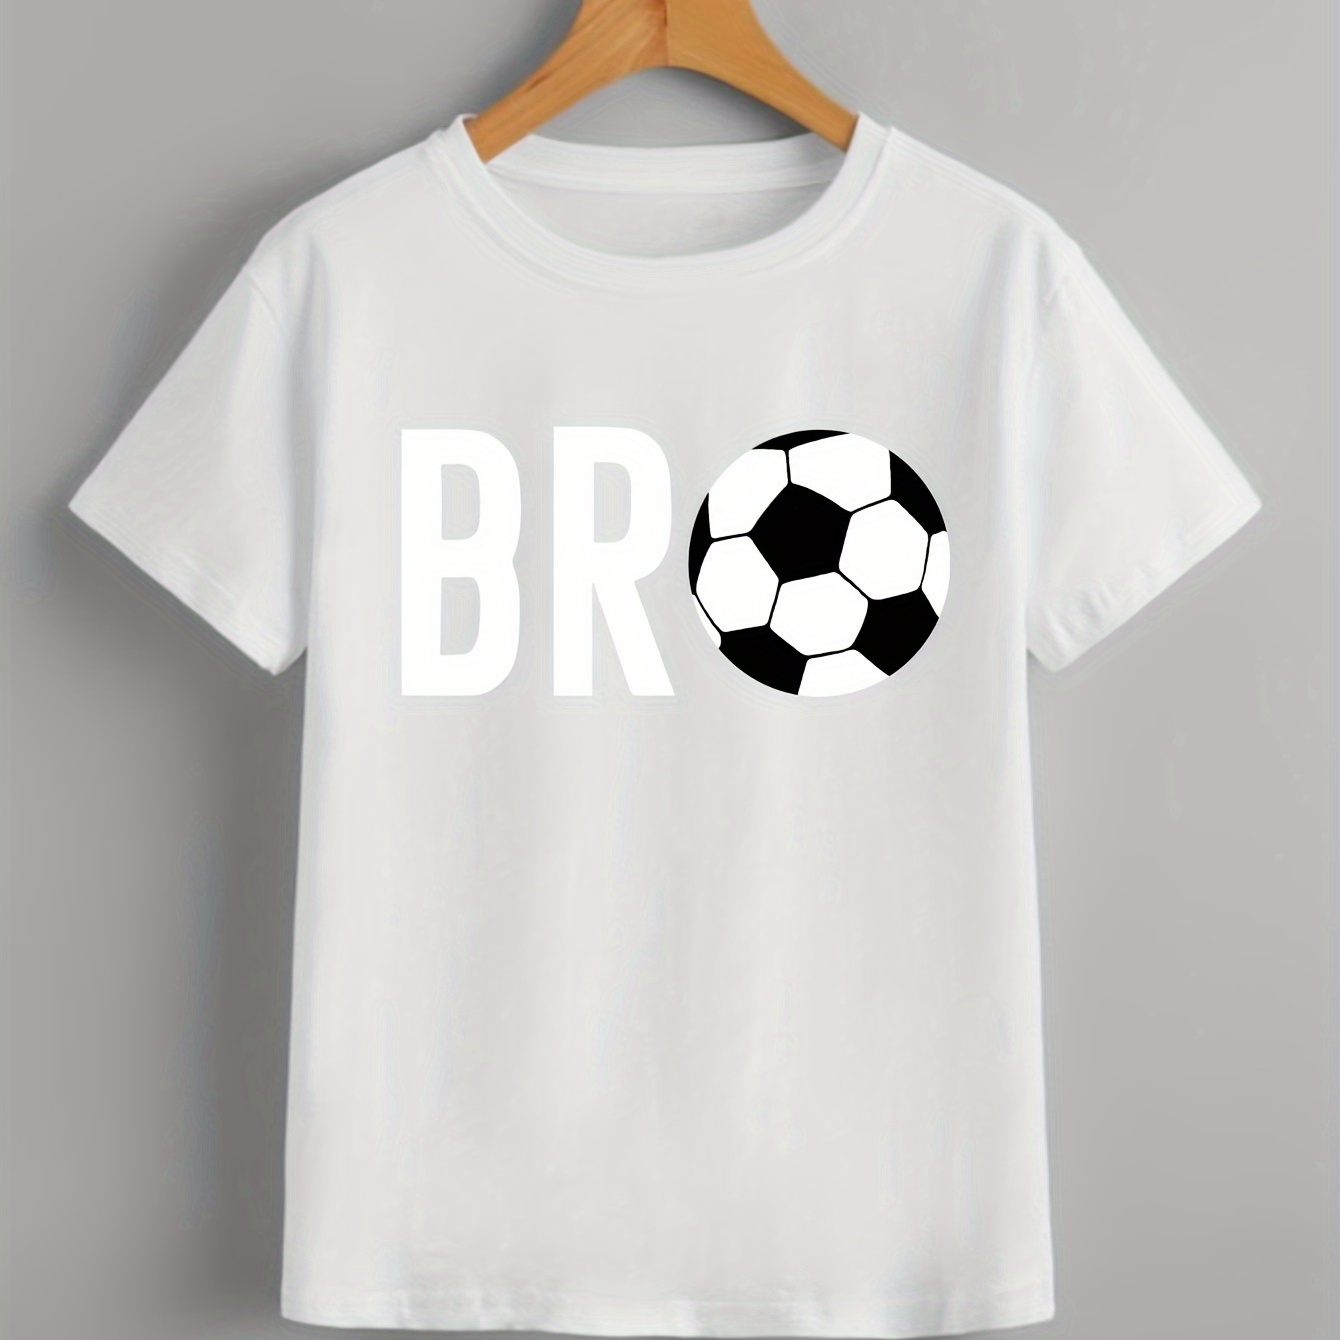 

Soccer Bro Print Boy's Casual T-shirt, Vibrant Comfortable Short Sleeve Top, Boys Summer Clothing